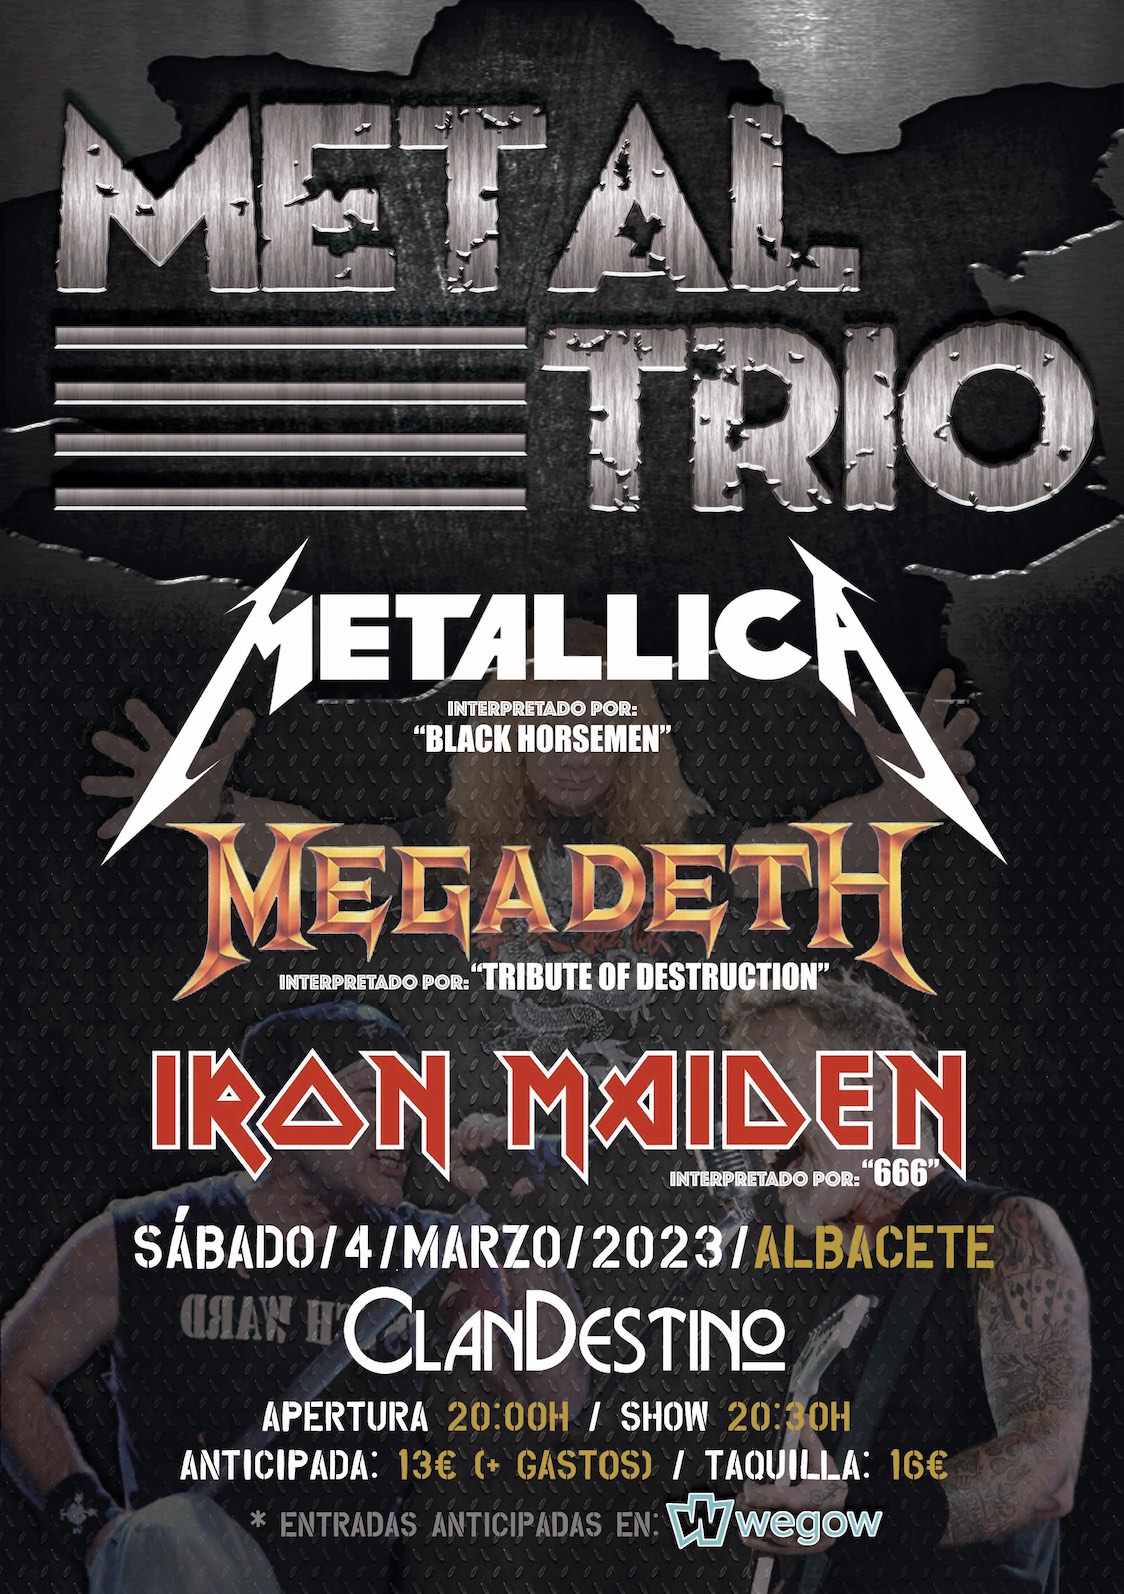 metal trio iron maiden megadeth metallica albacete 16728644839142792